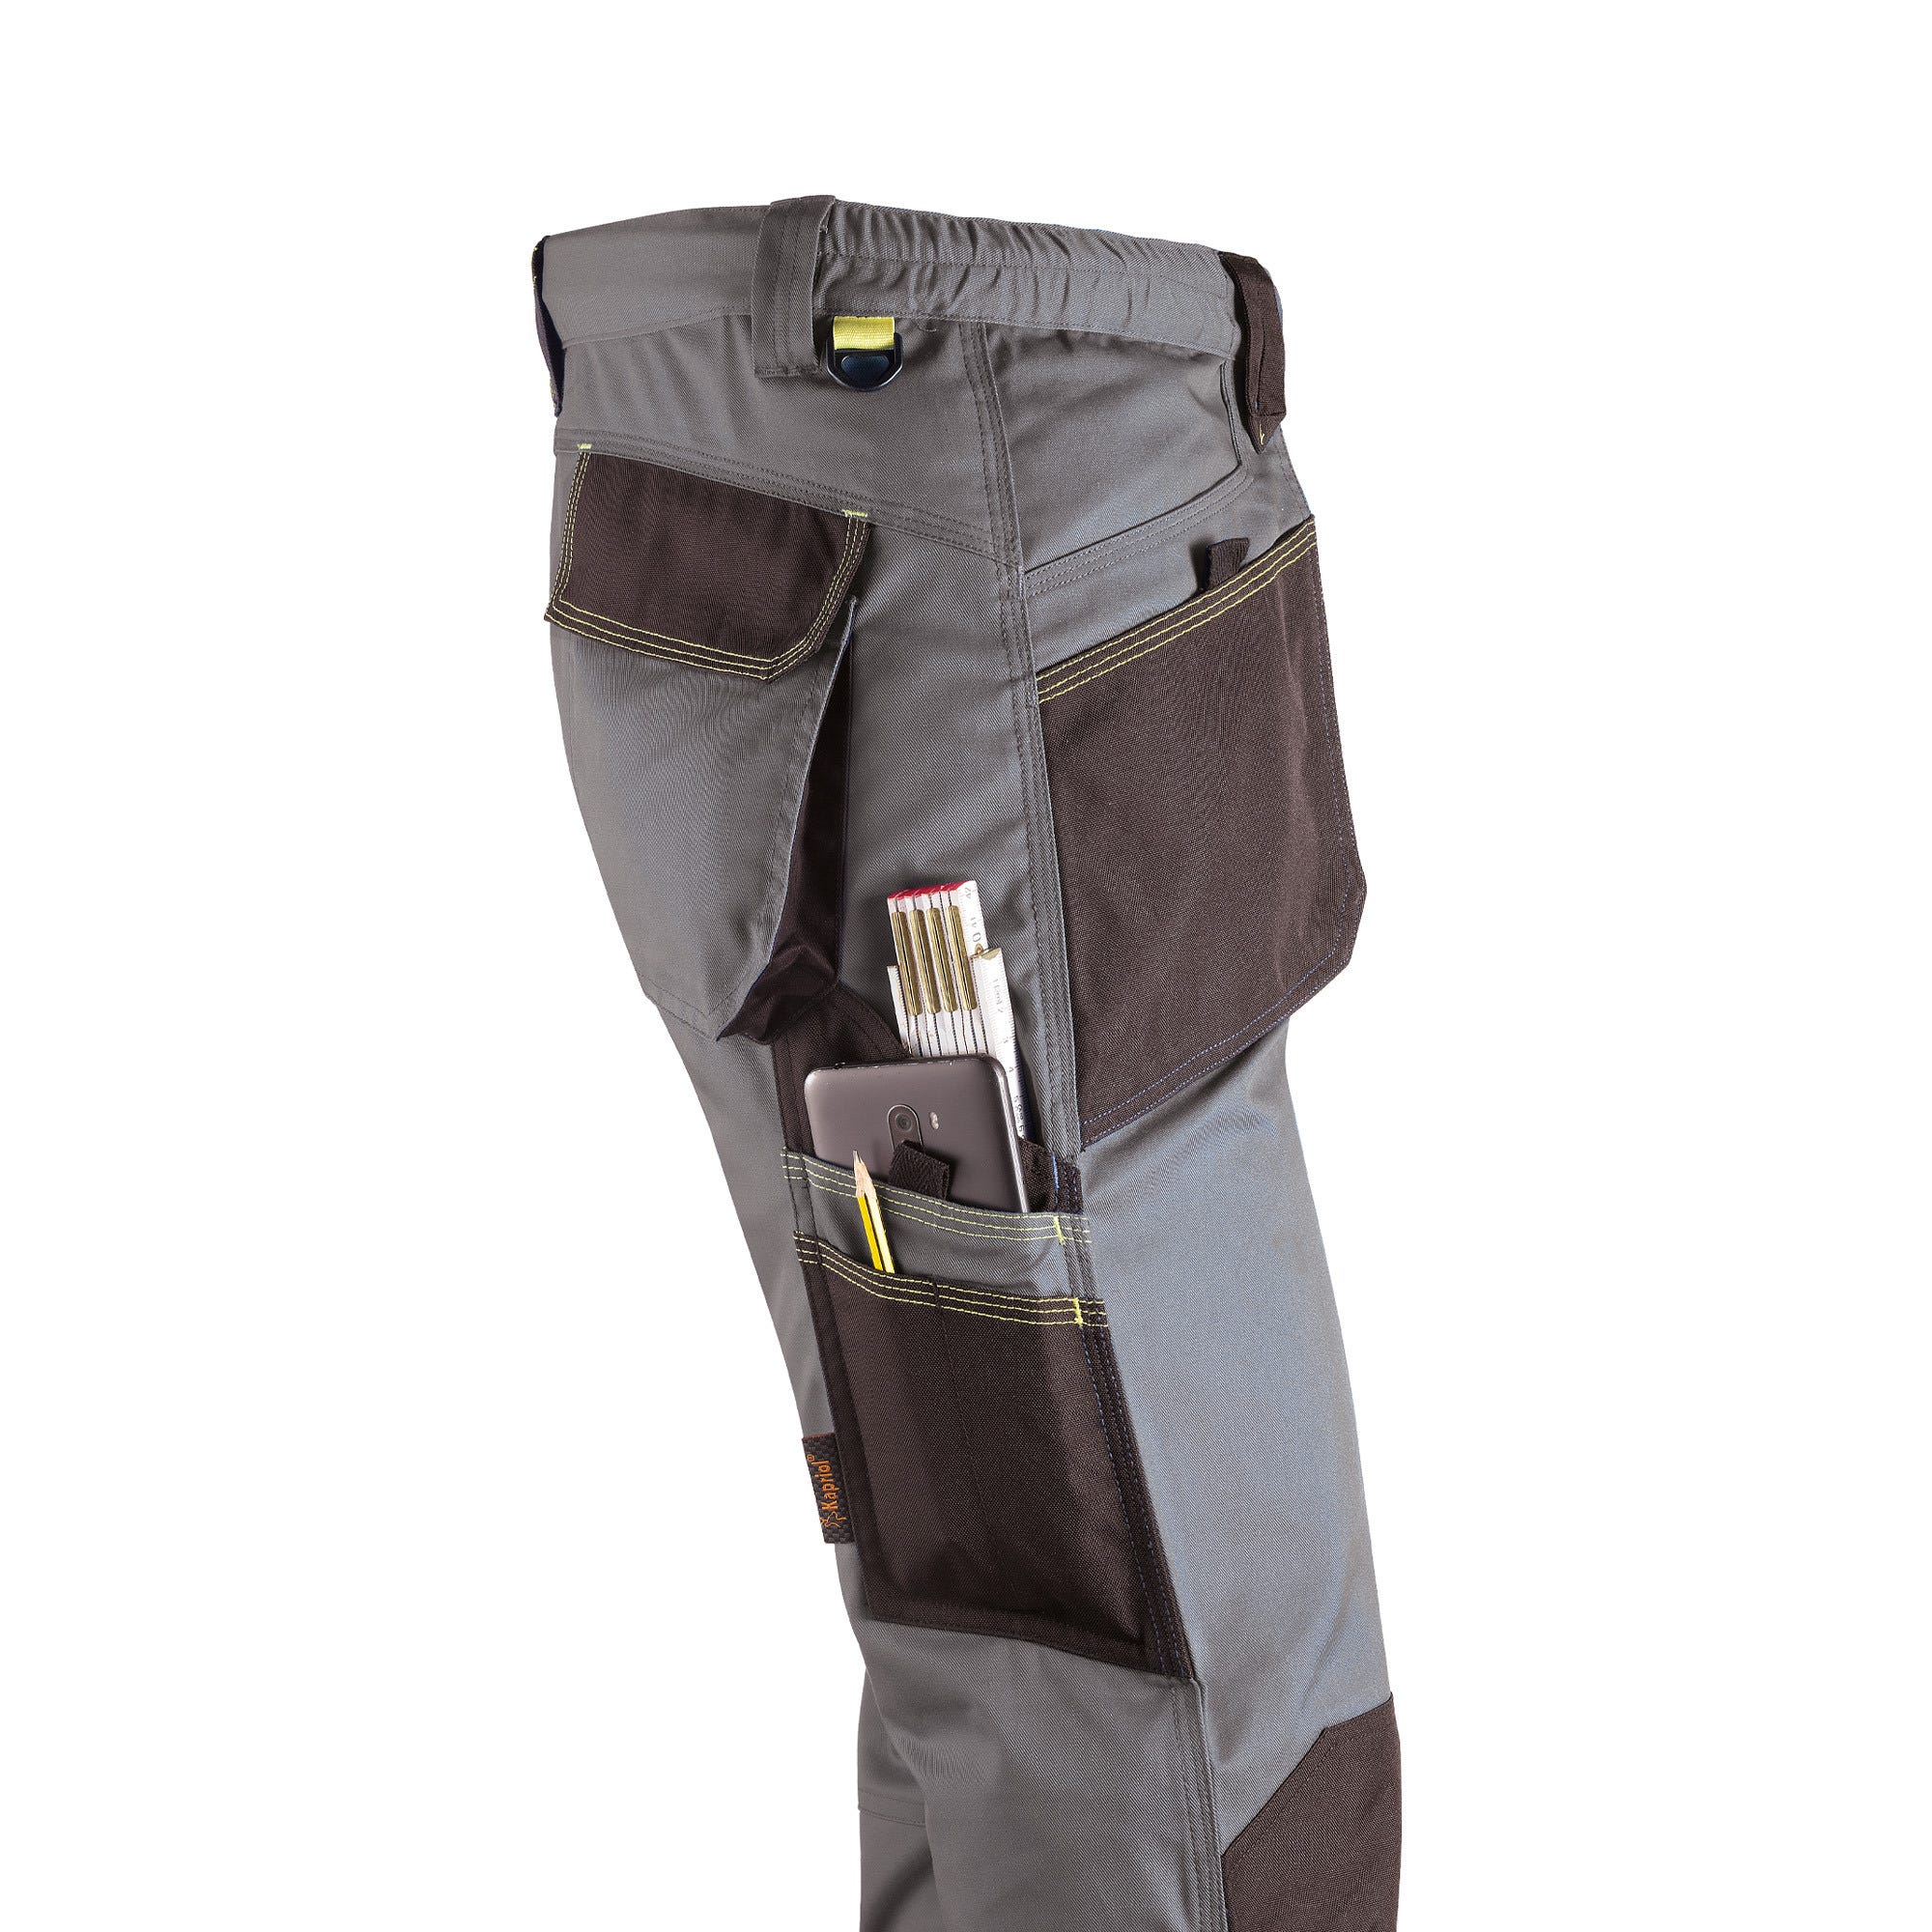 Pantalon de travail gris/noir T.XXXL SPOT - KAPRIOL 3